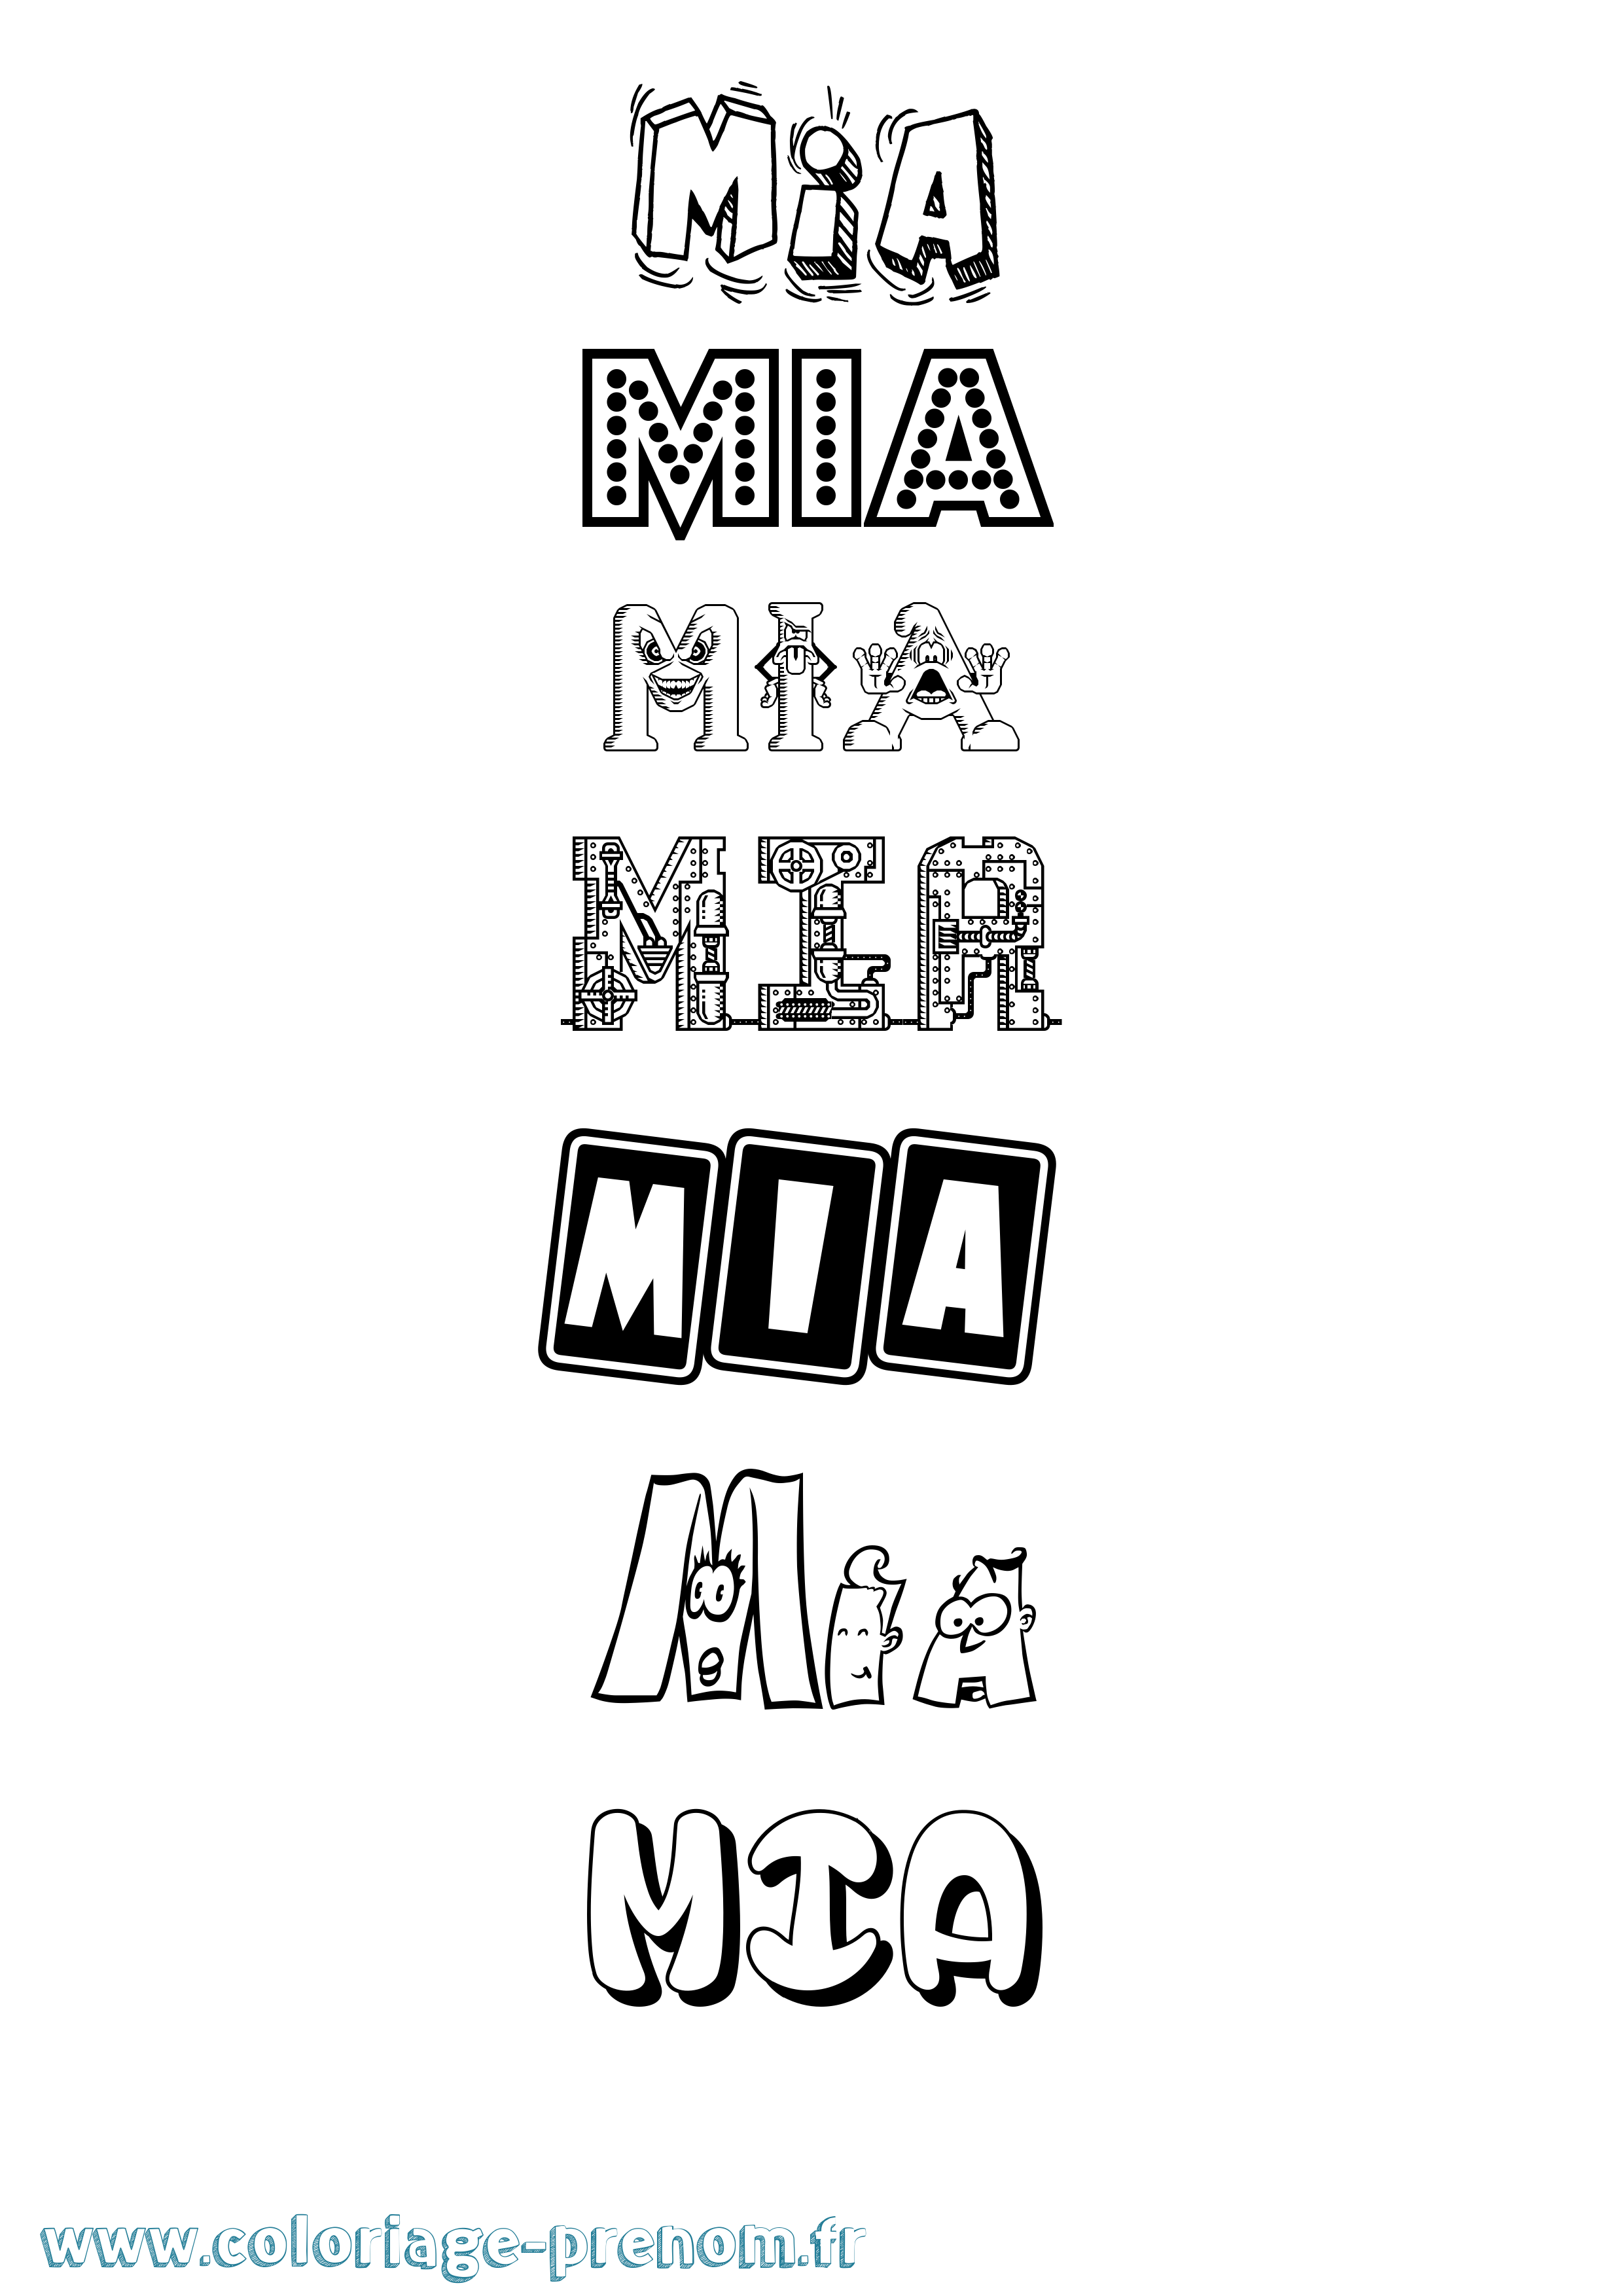 Coloriage prénom Mia Fun